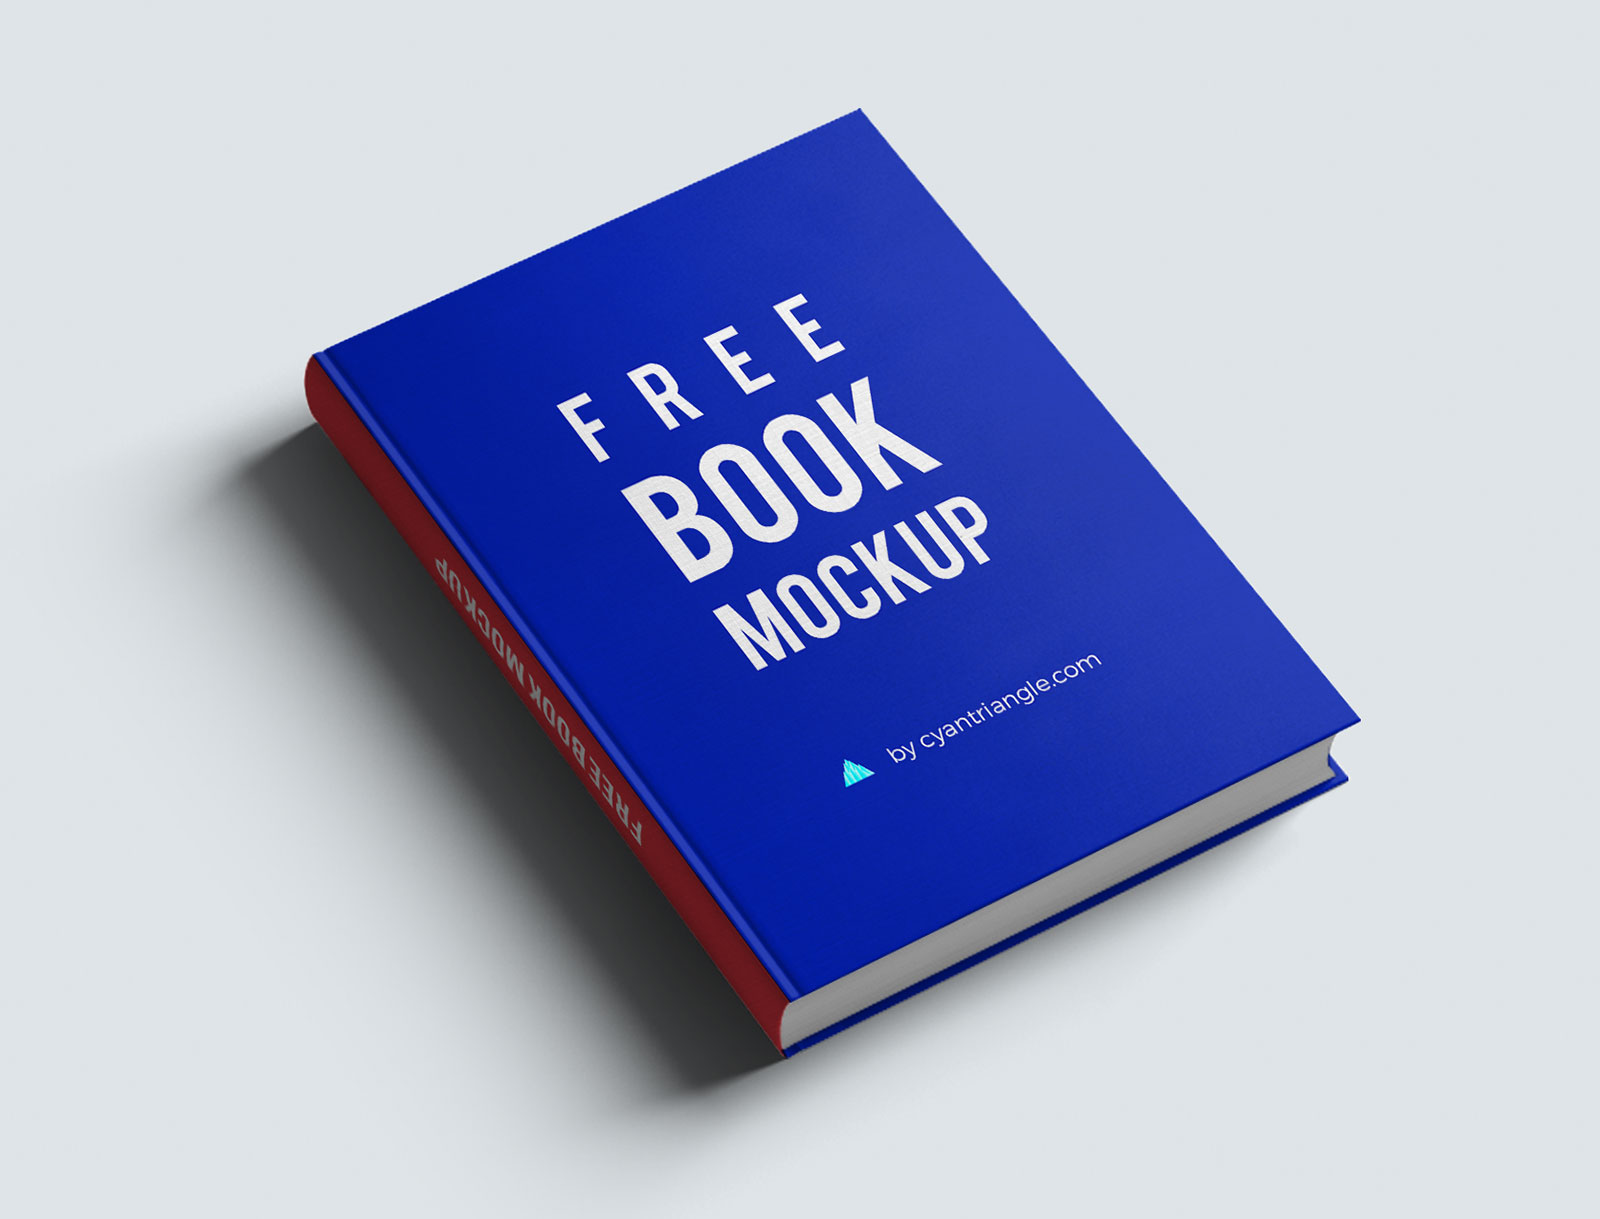 Mockup free psd book information